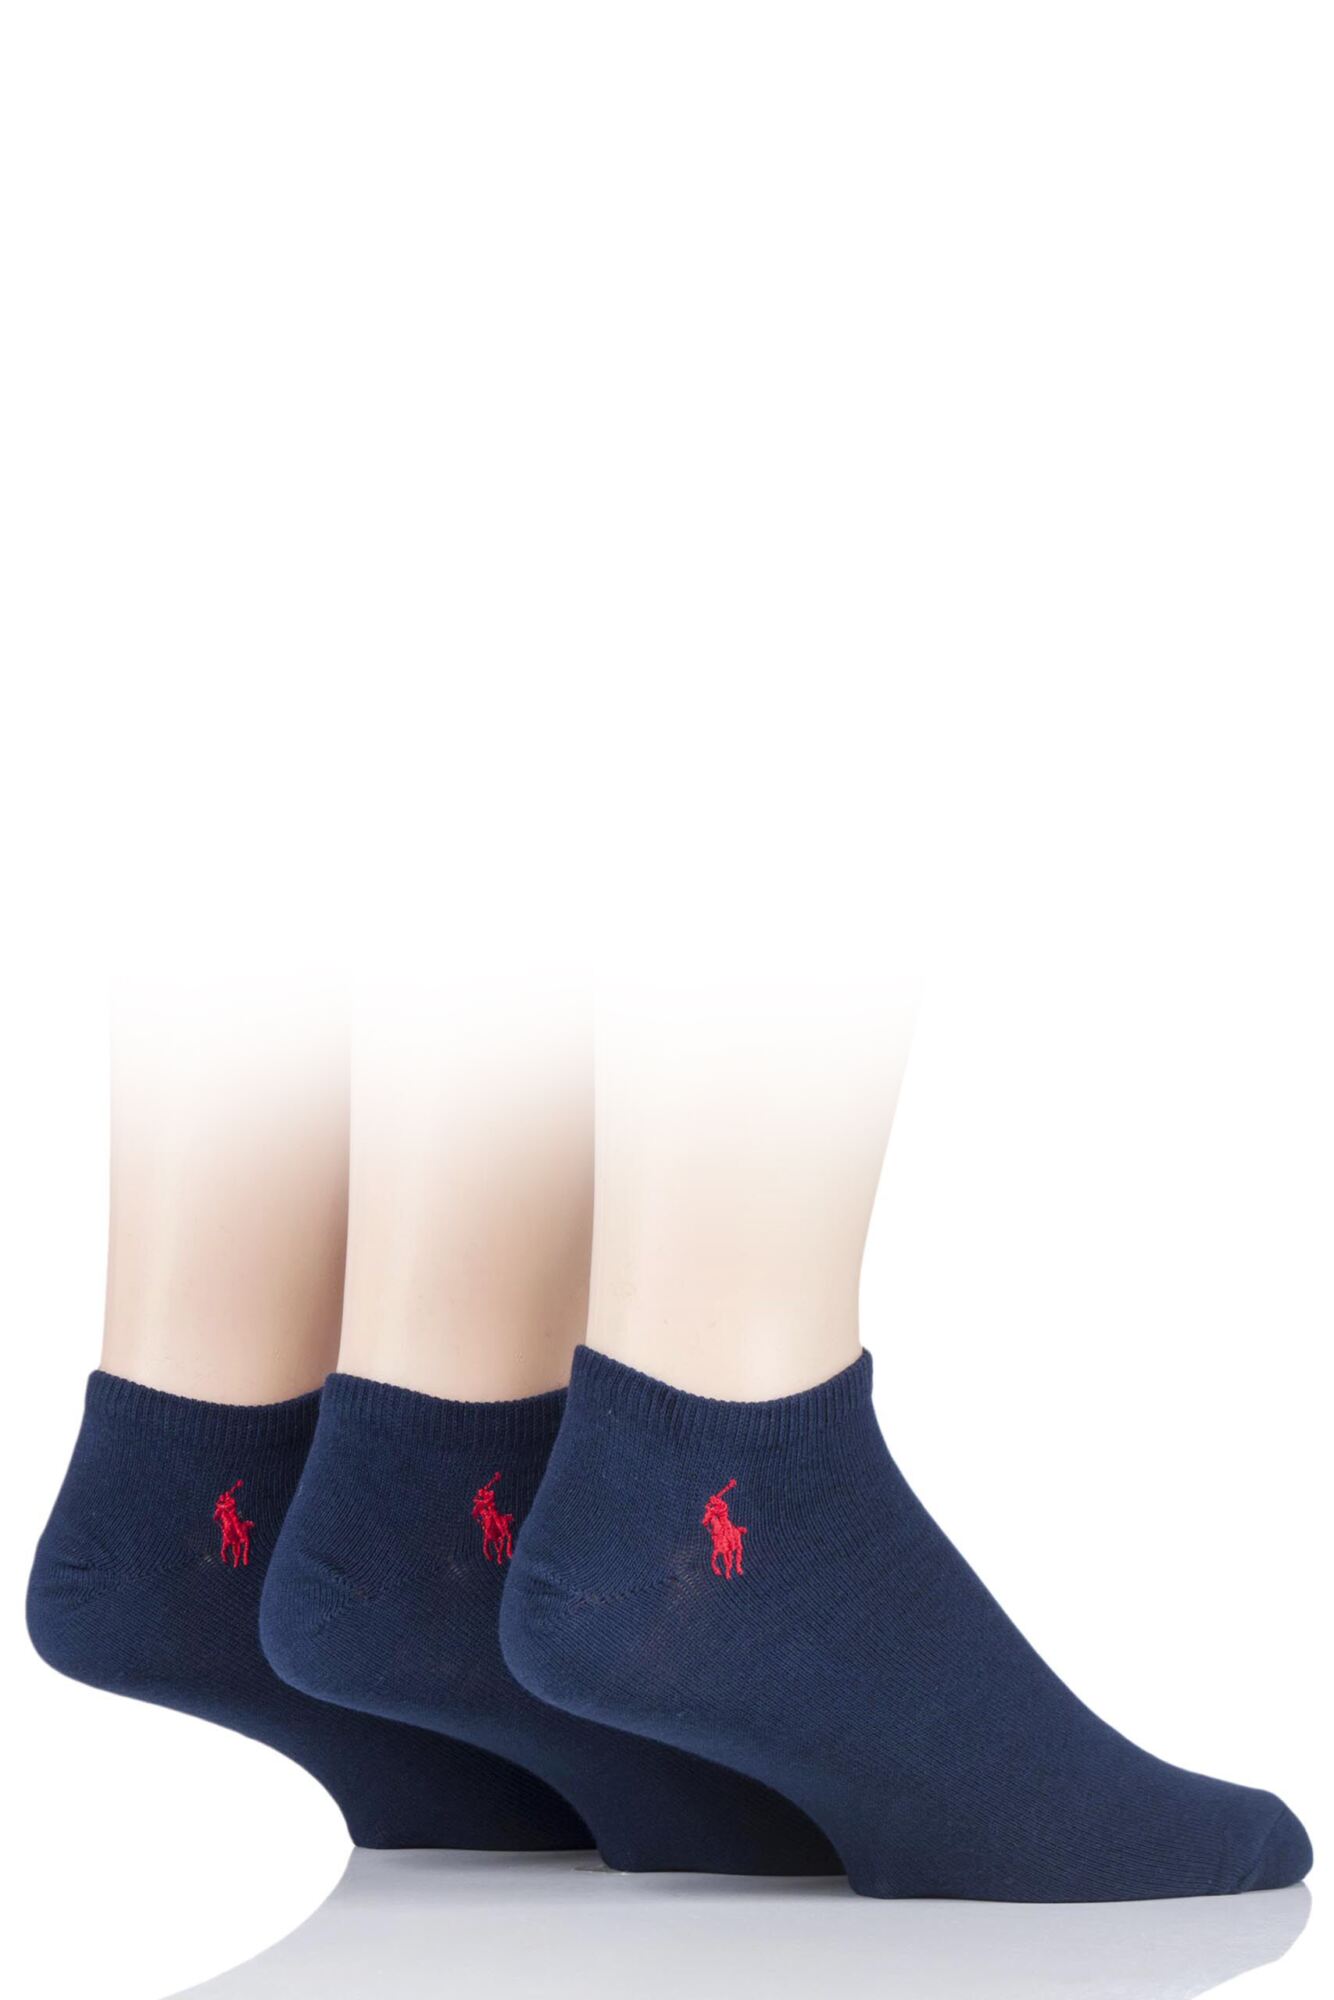 3 Pair Plain Cotton Ghost Ped Socks Men's - Ralph Lauren